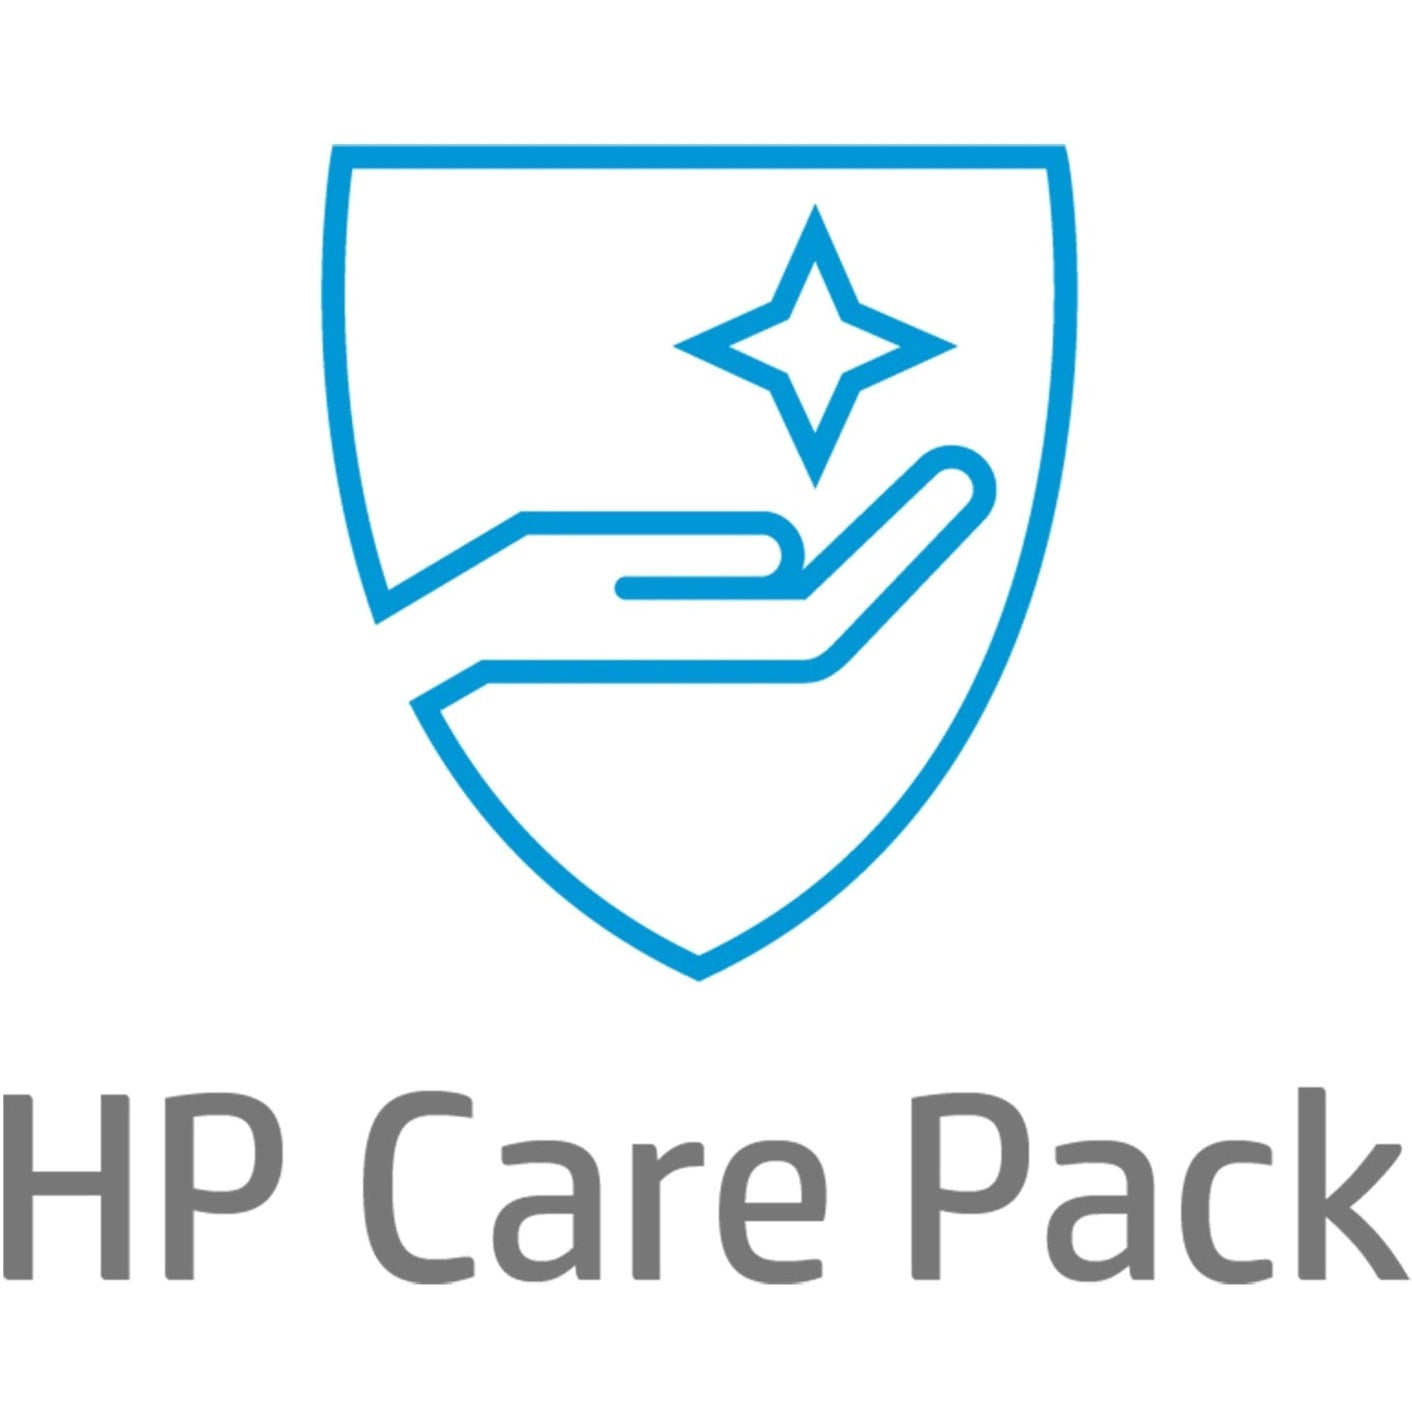 HP Care Pack - Extended Warranty - 4 Year - Warranty (U9NF9E)